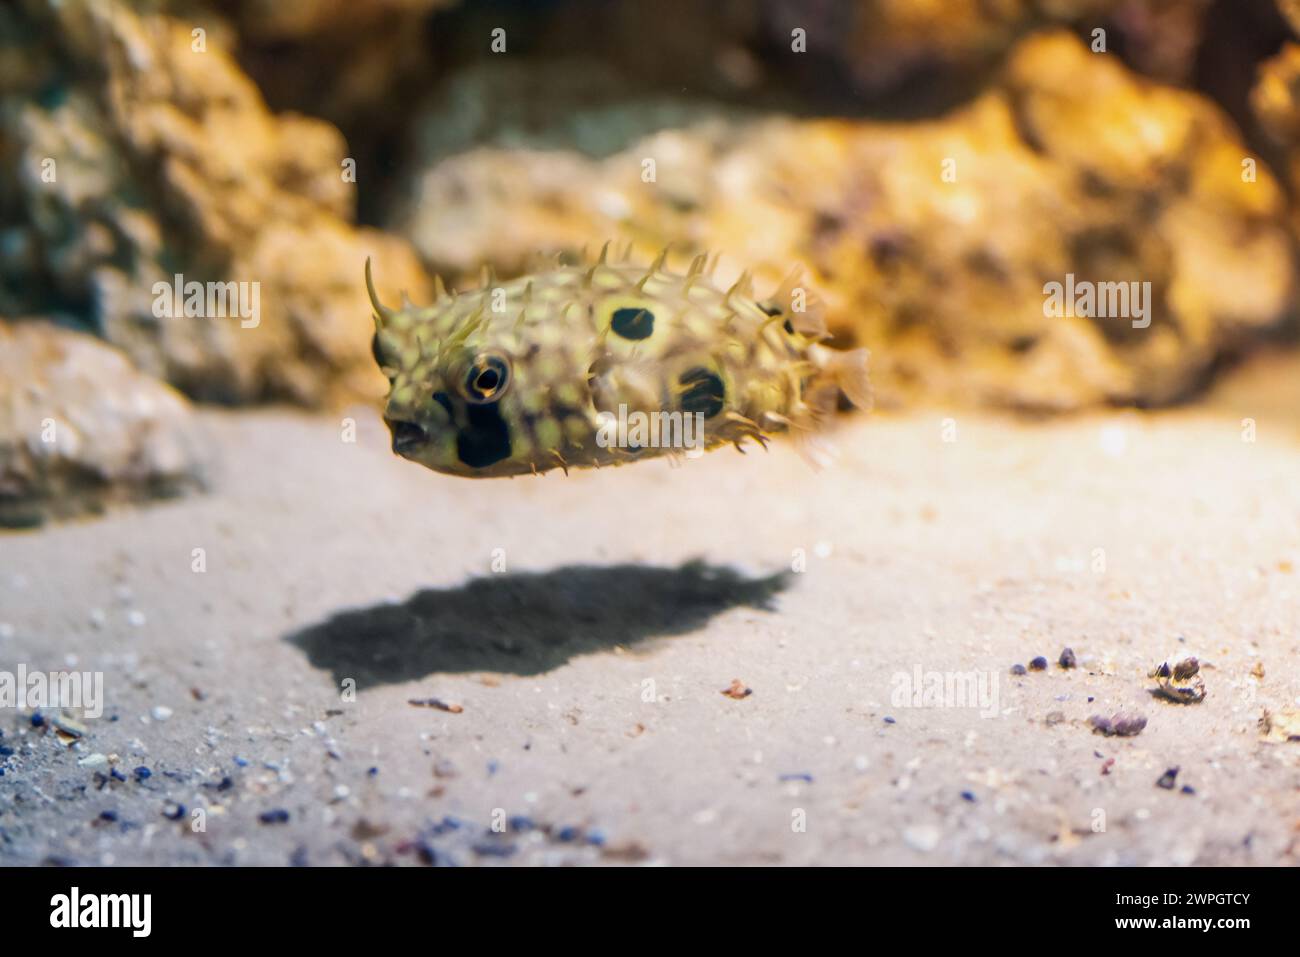 Pesce porcospino (Chilomycterus spinosus) o pesce ratto bruno - pesce marino Foto Stock